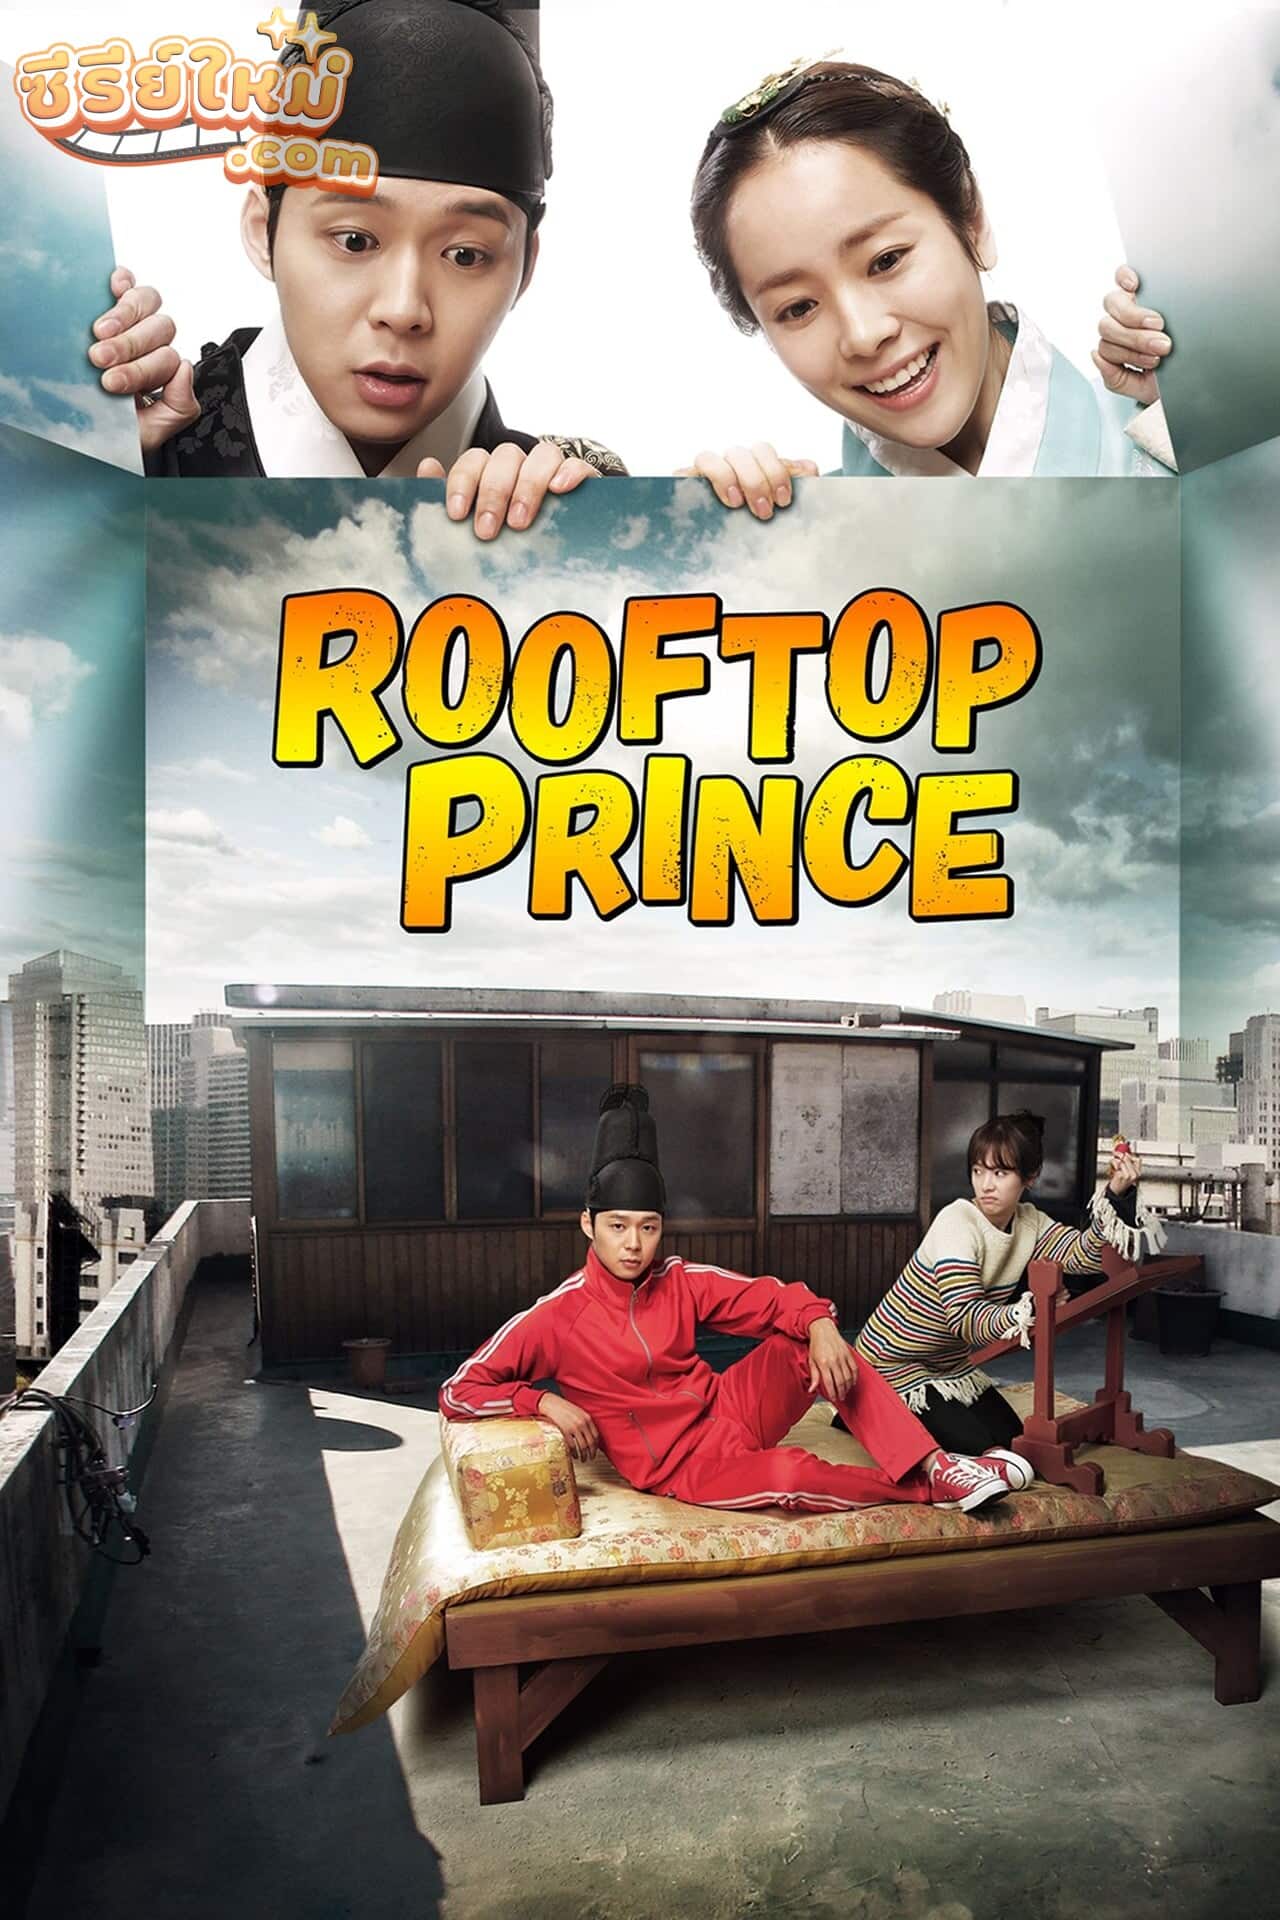 Rooftop Prince ตามหาหัวใจเจ้าชายหลงยุค (2012)